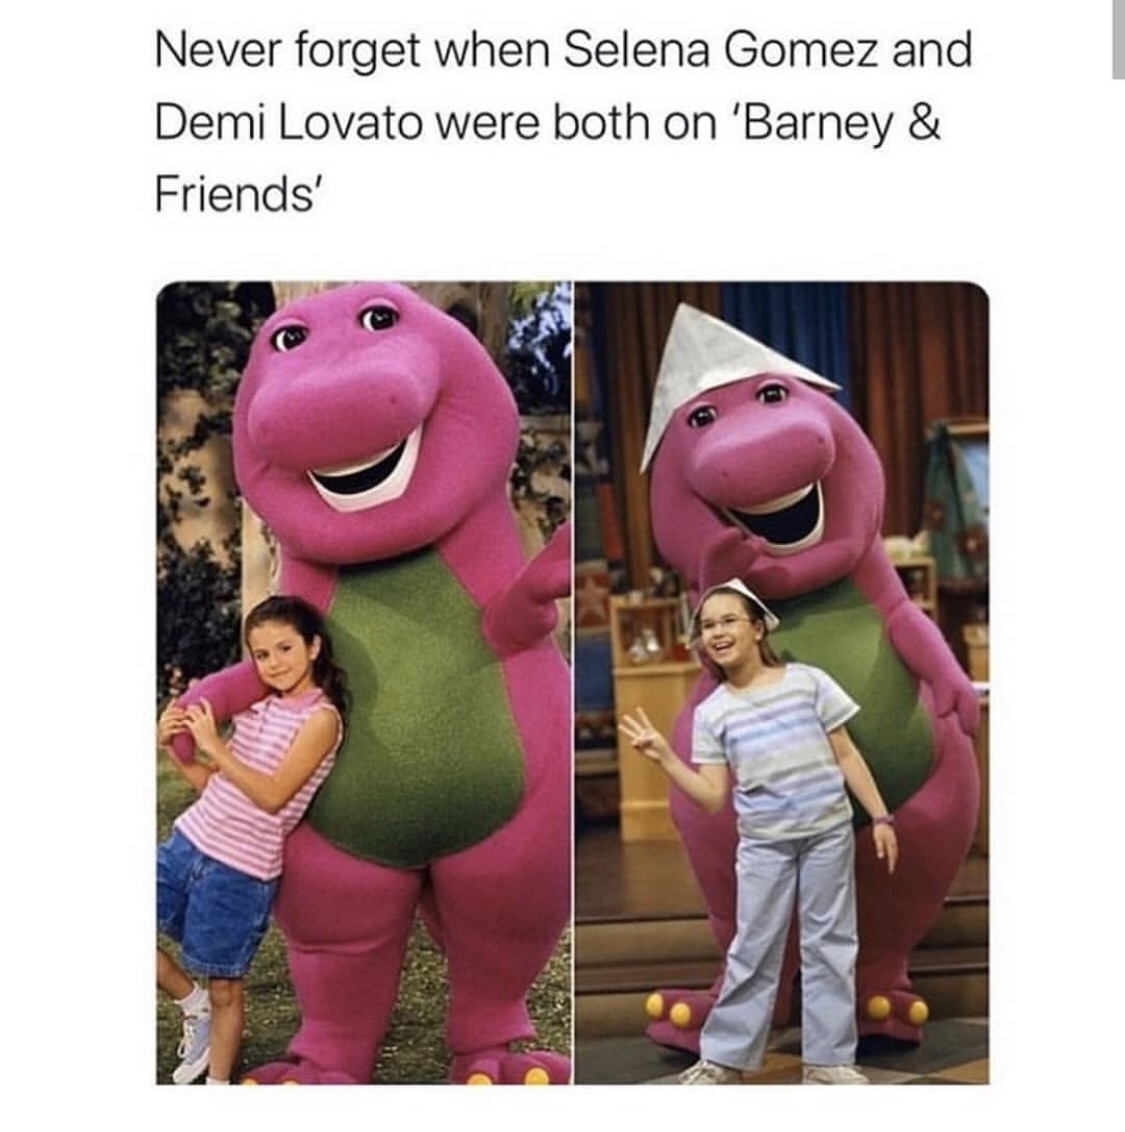 selena gomez on barney - Never forget when Selena Gomez and Demi Lovato were both on 'Barney & Friends'